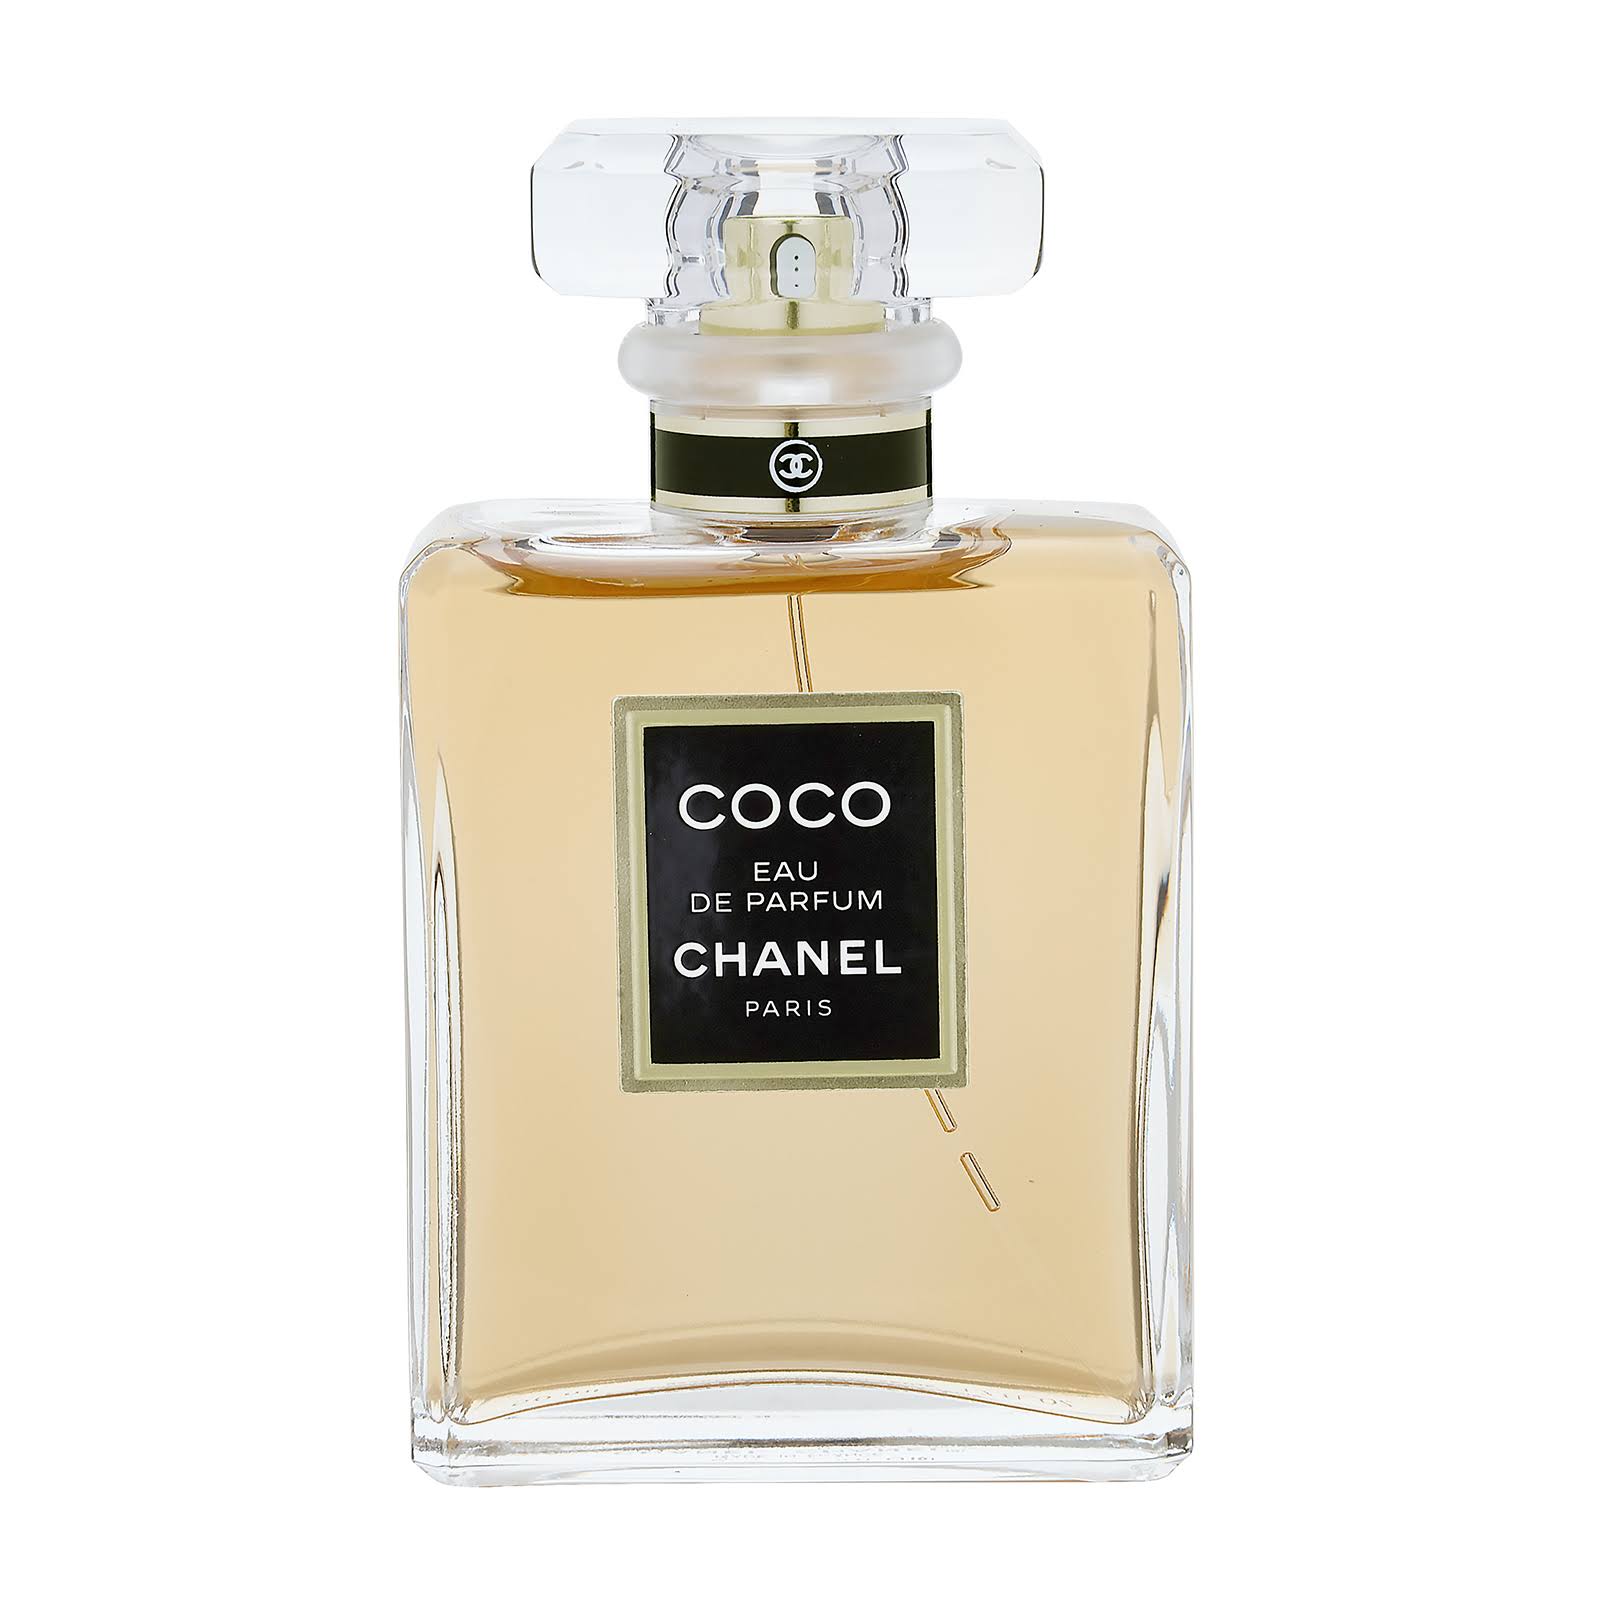 Chanel Coco for Women Eau De Parfum Spray - 50ml